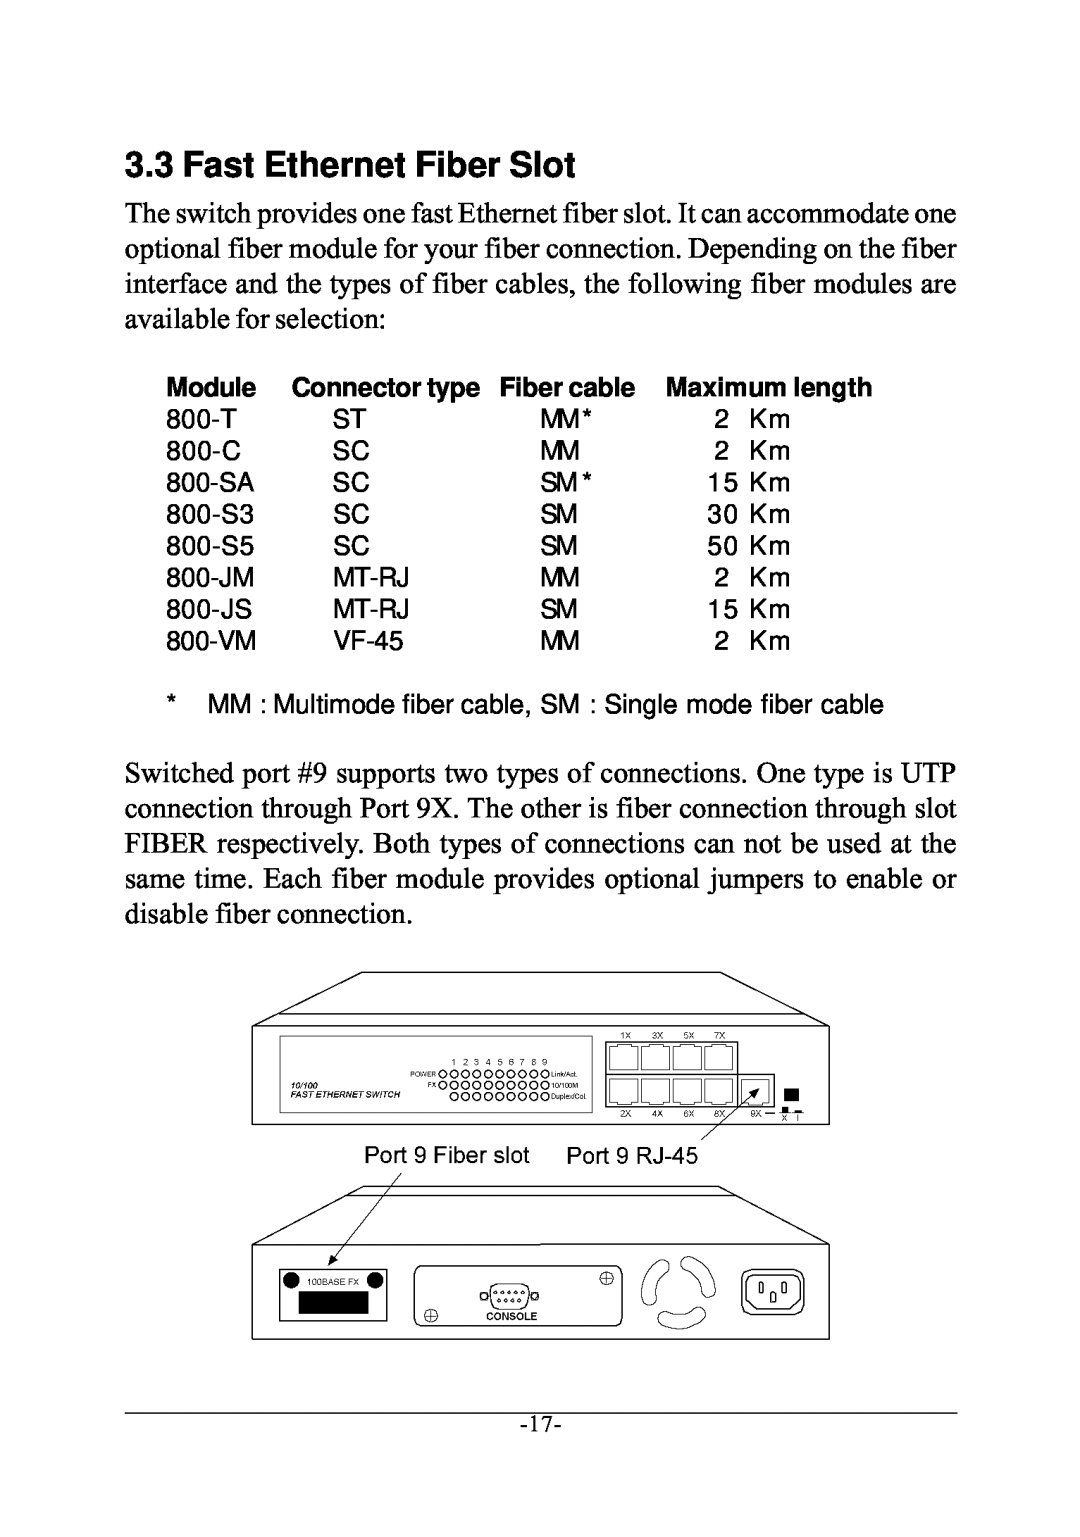 KTI Networks KS-801 manual Fast Ethernet Fiber Slot 